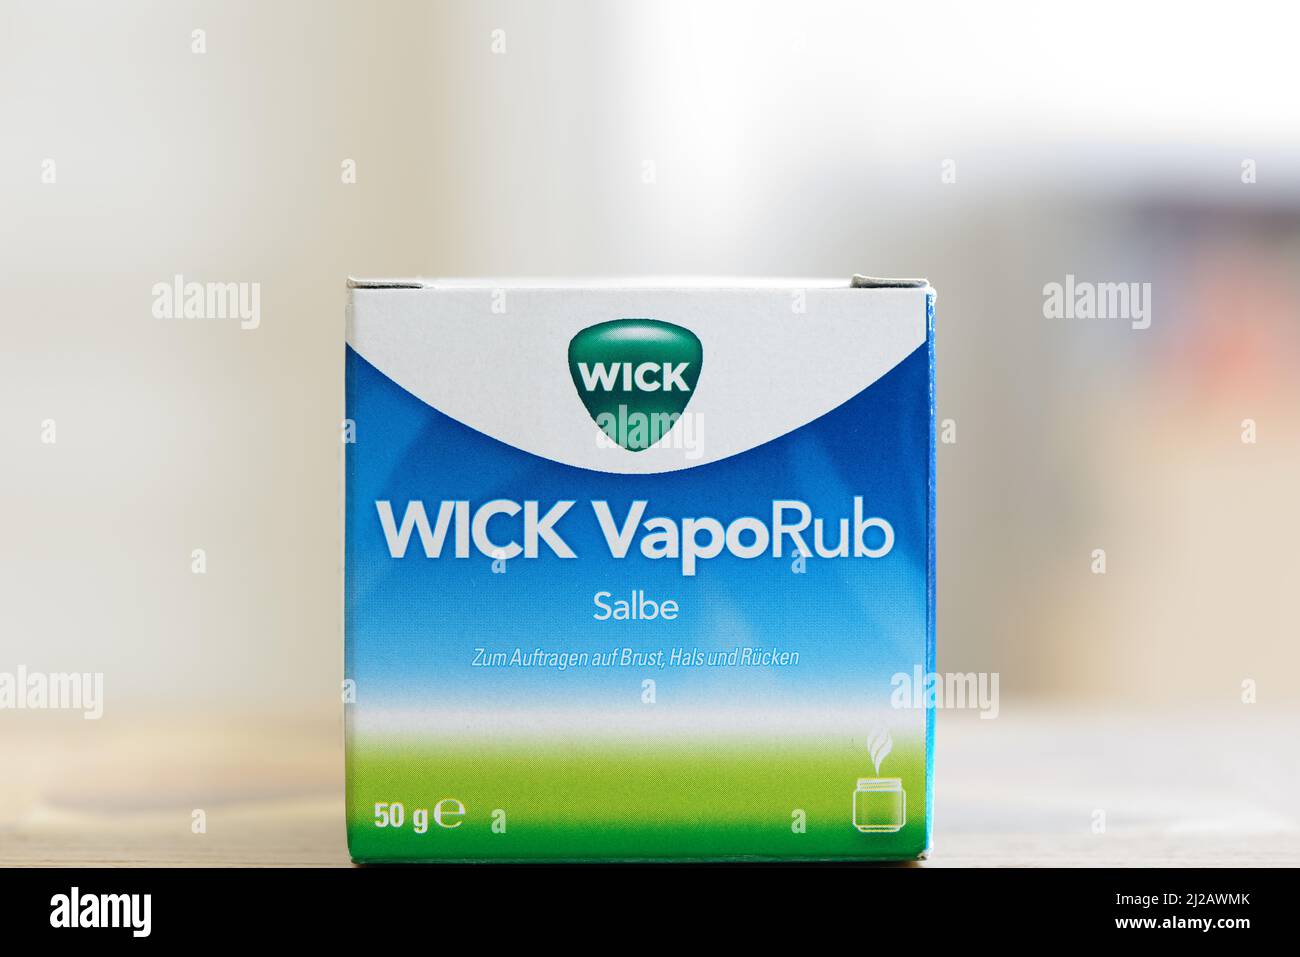 Pack of Wick Vapo Rub ointment Stock Photo